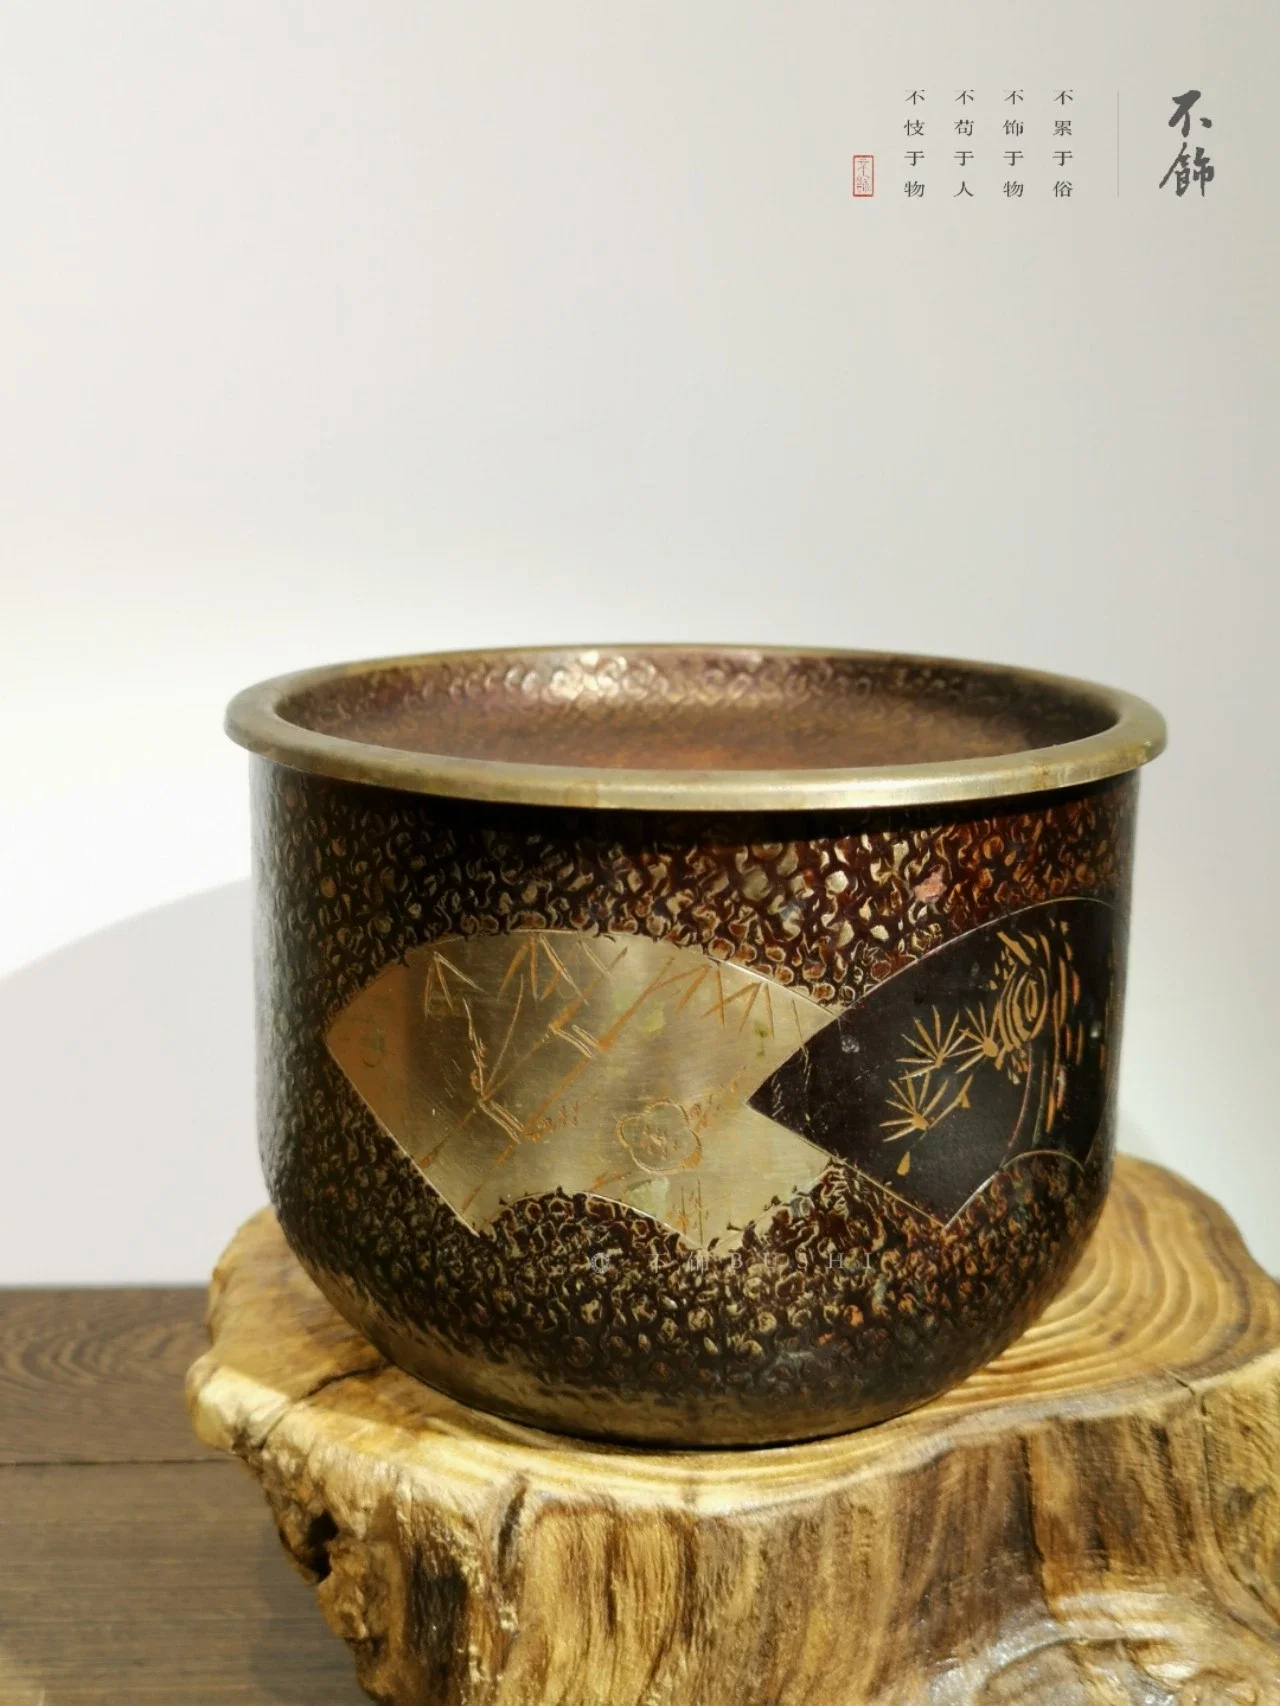 古薩摩 薄茶茶碗 骨董 時代物 コレクション 天目茶碗 茶器 茶道具 - 陶芸